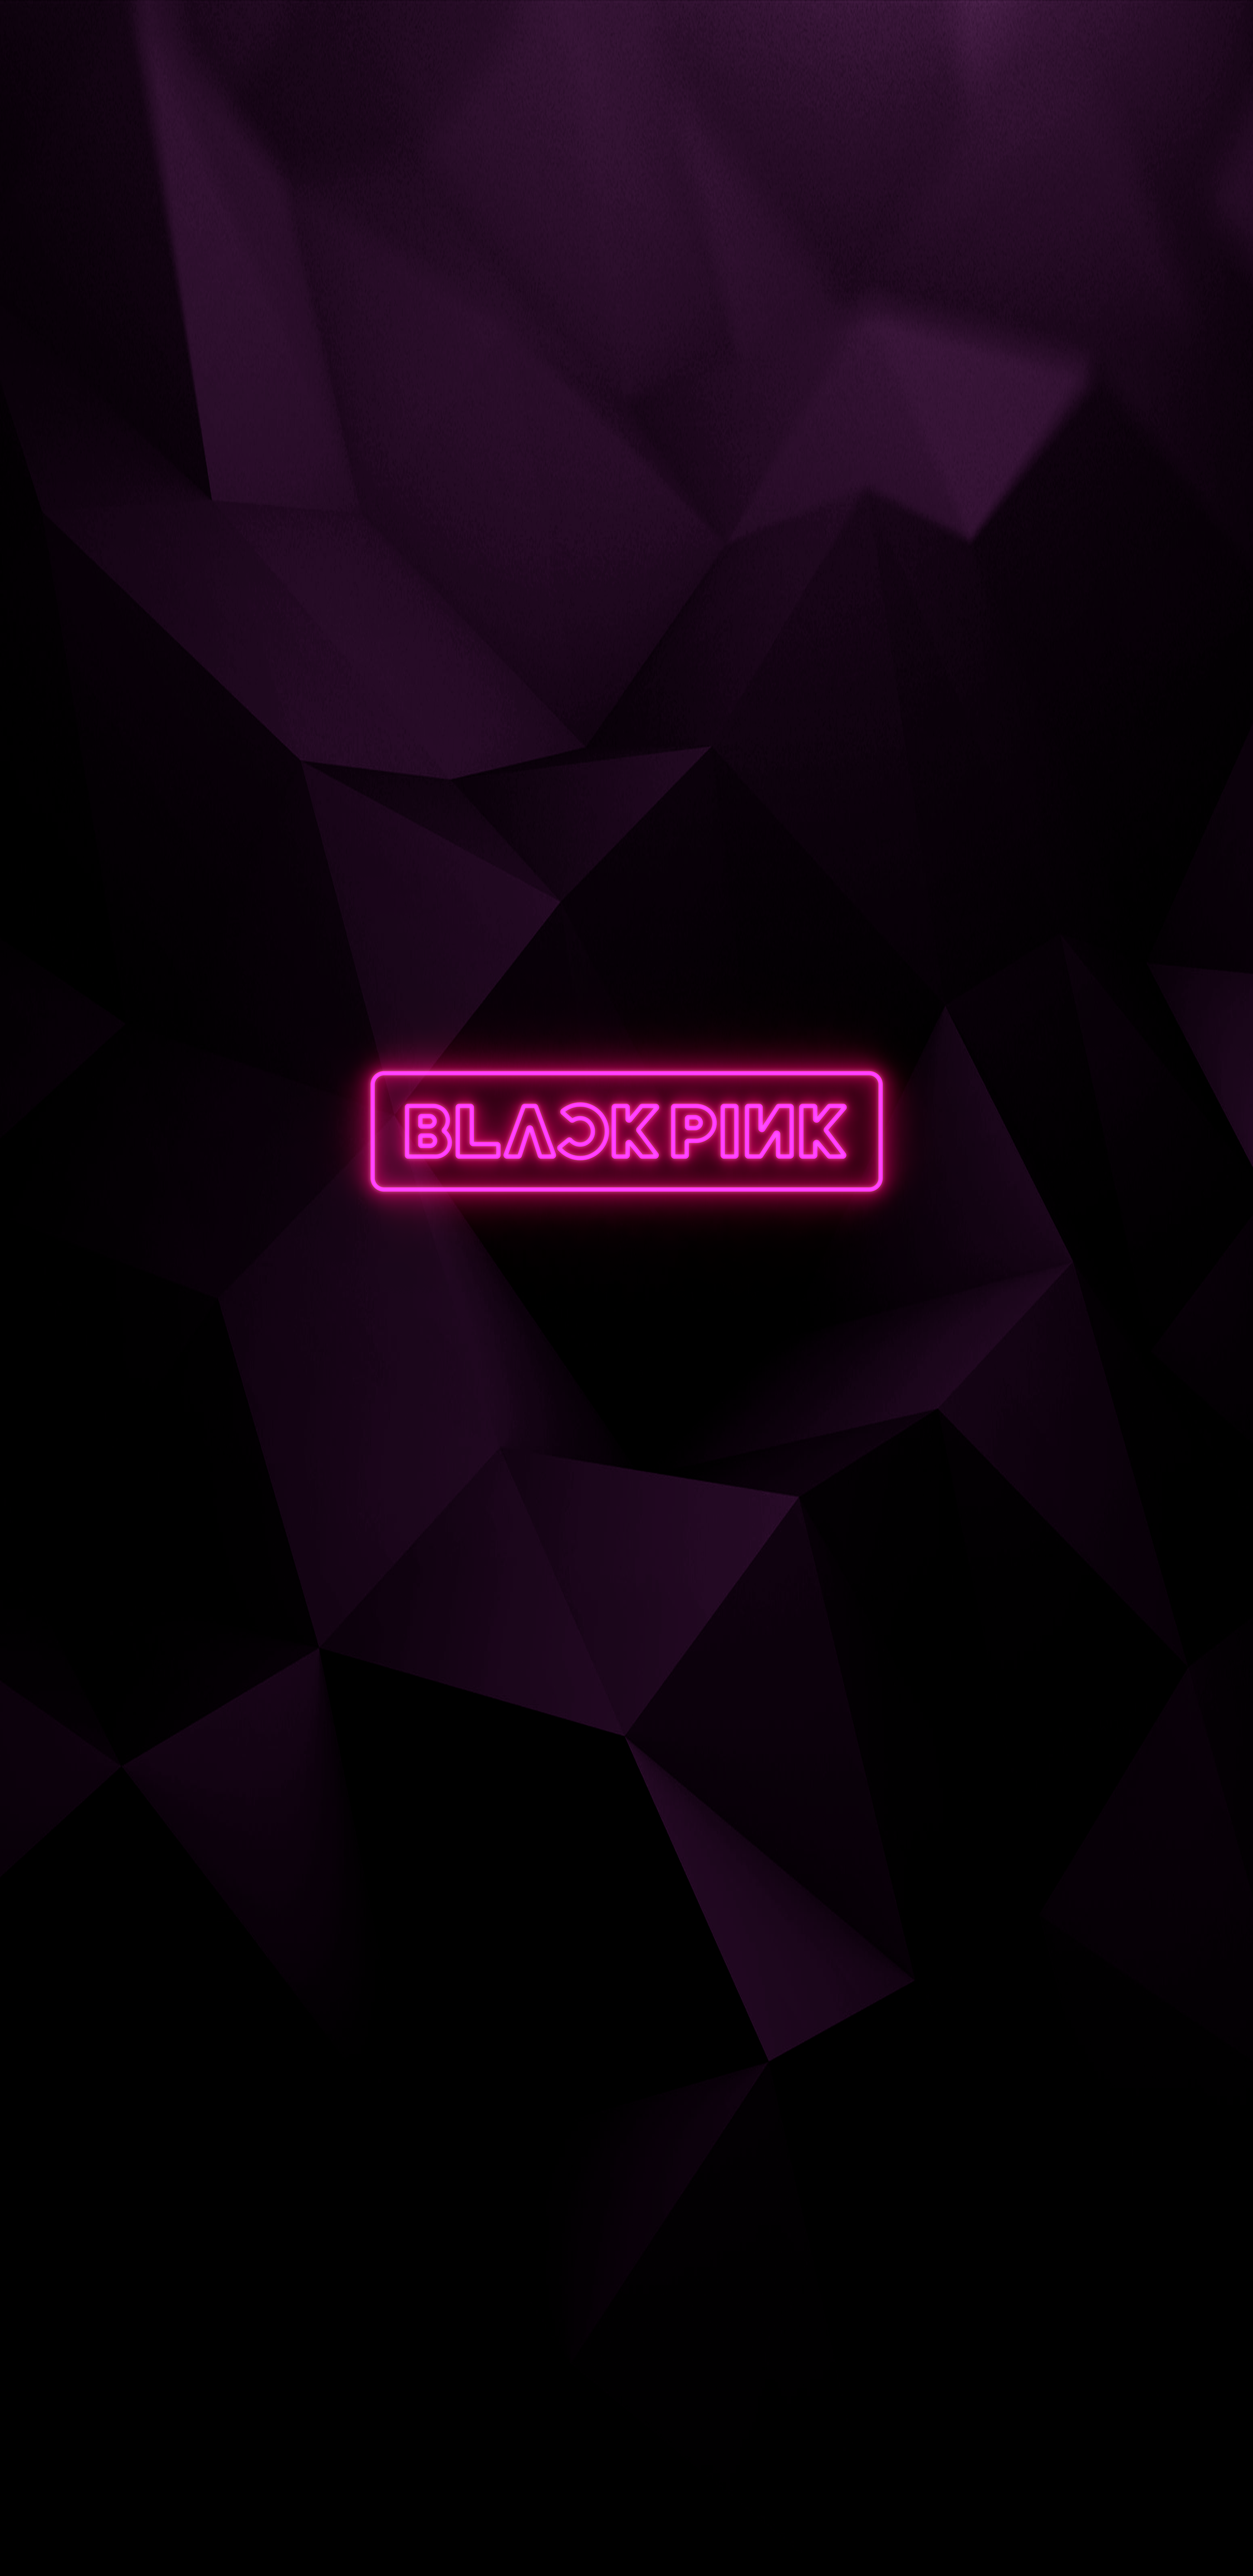 I made a BlackPink phone wallpaper